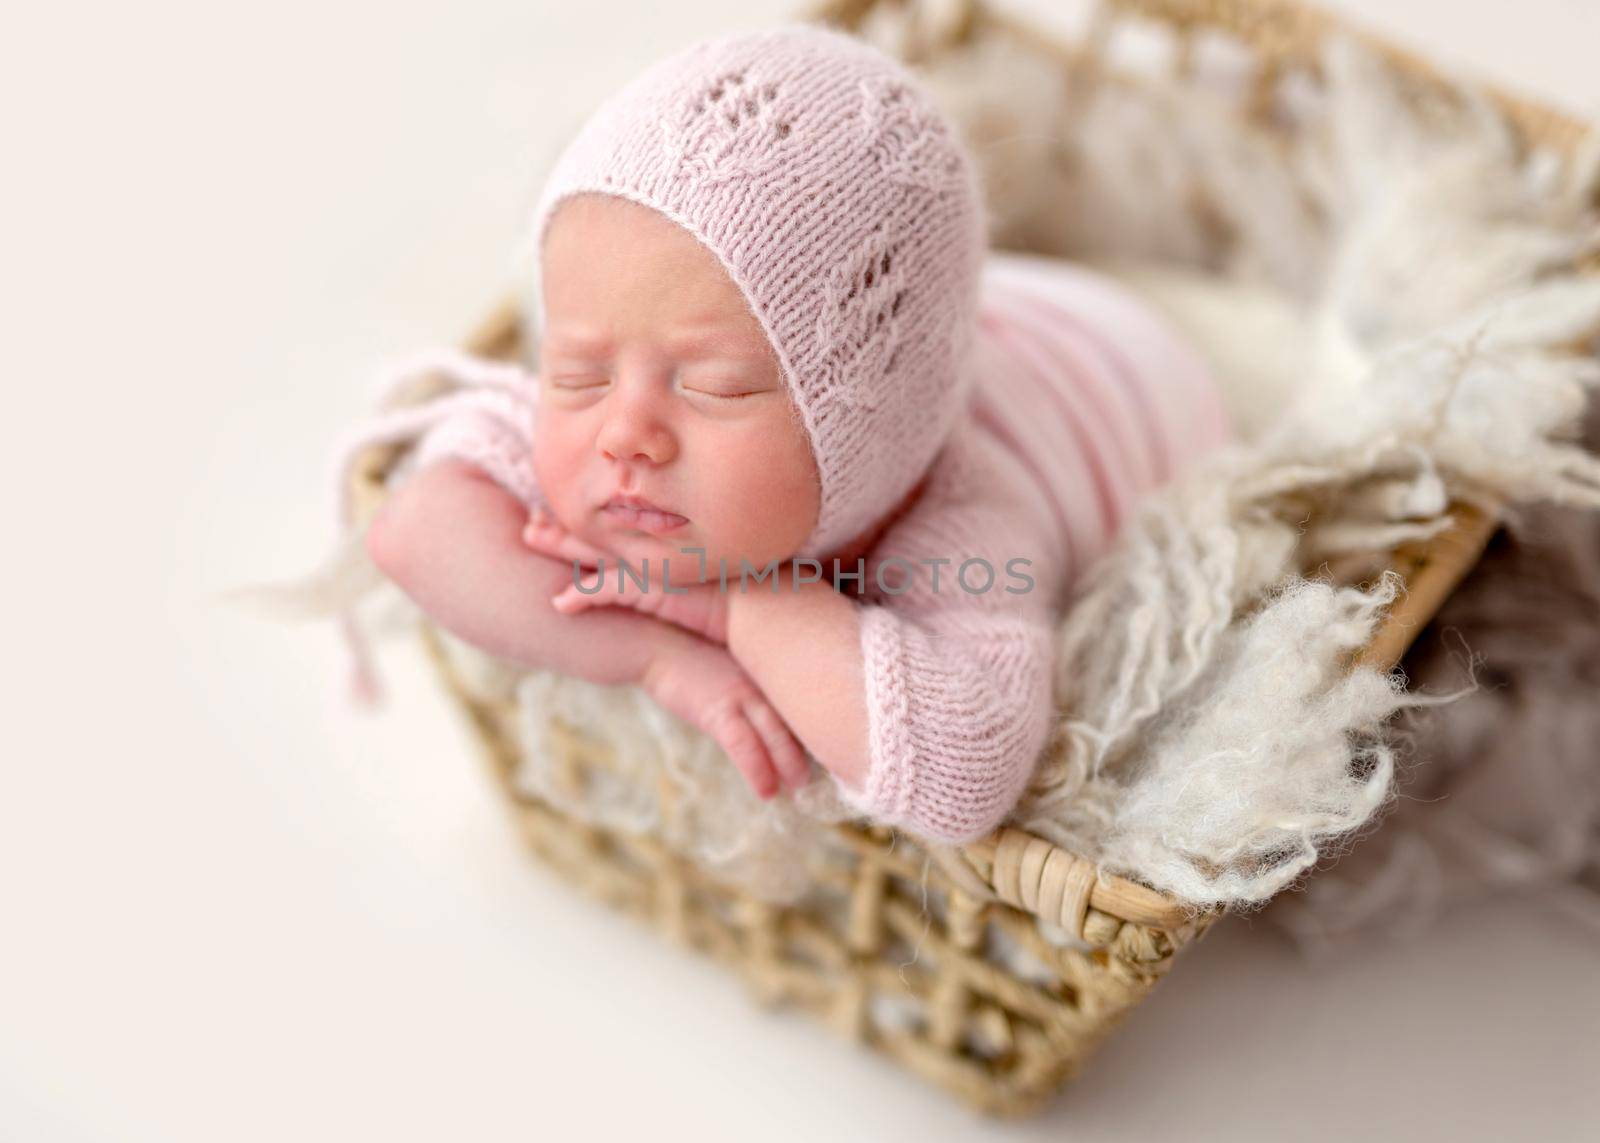 Cute sleeping newborn in basket wearing knitted outfit